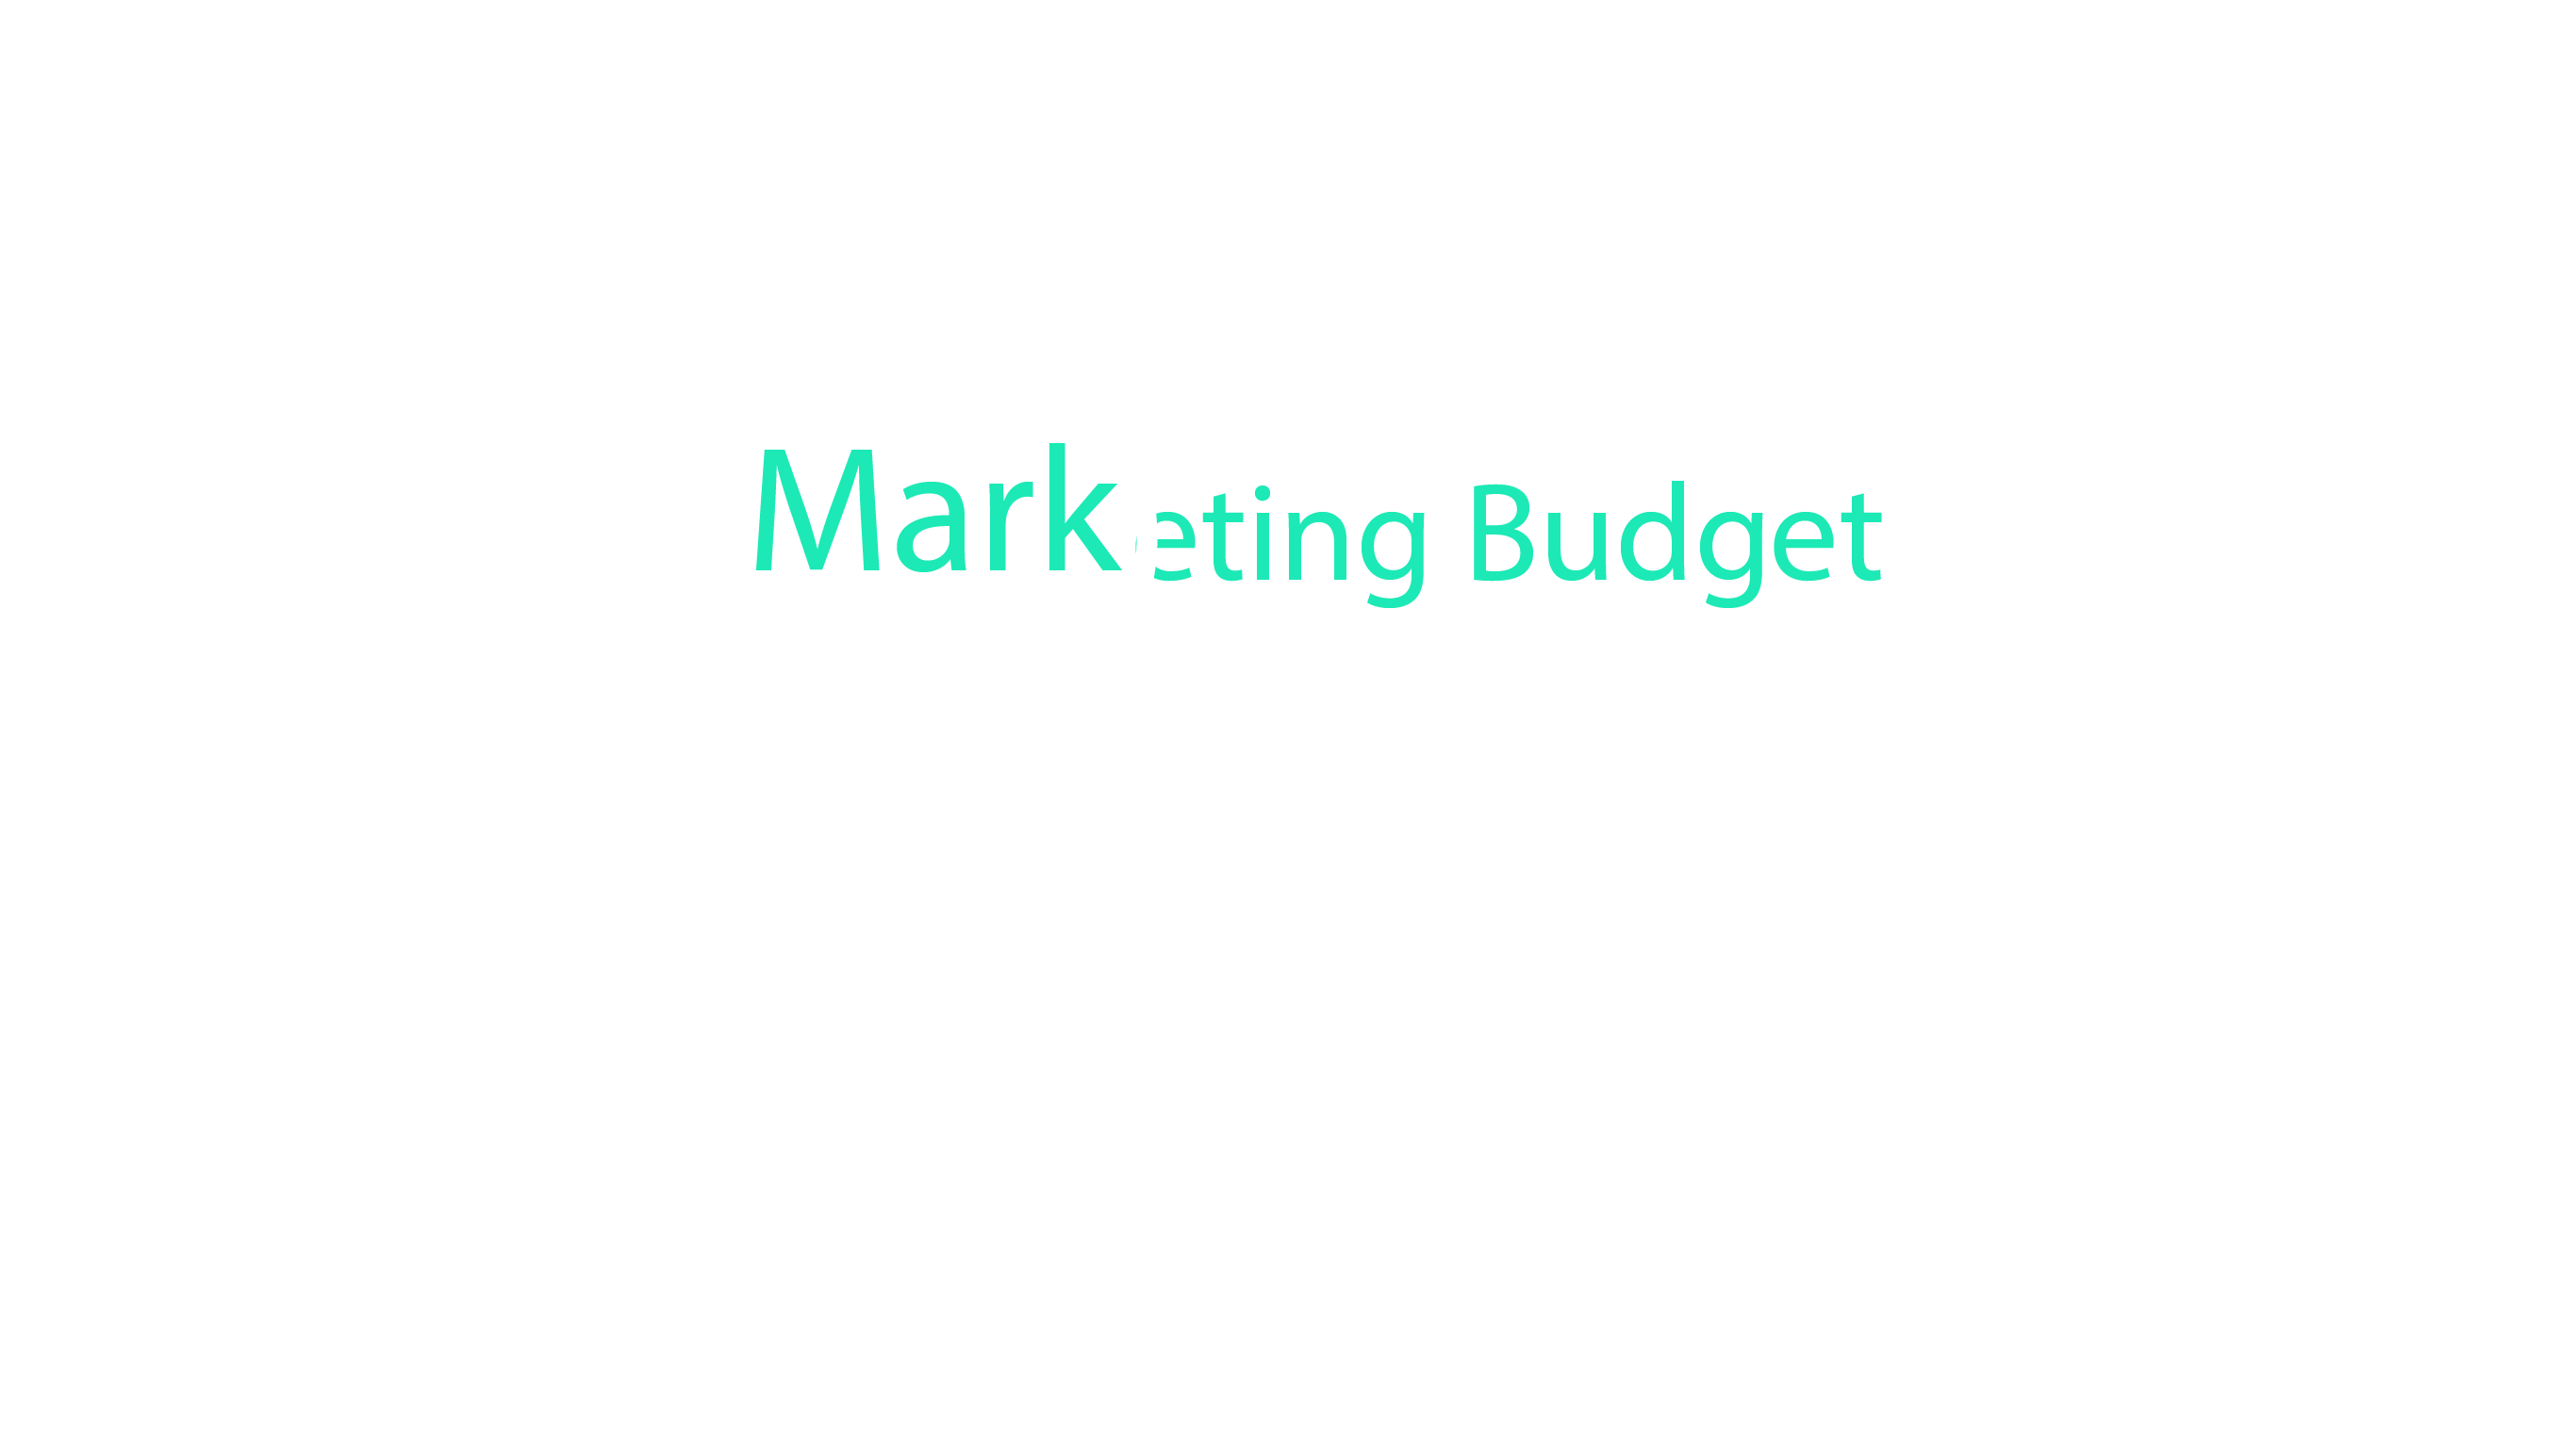 Marketing budget under scrutiny